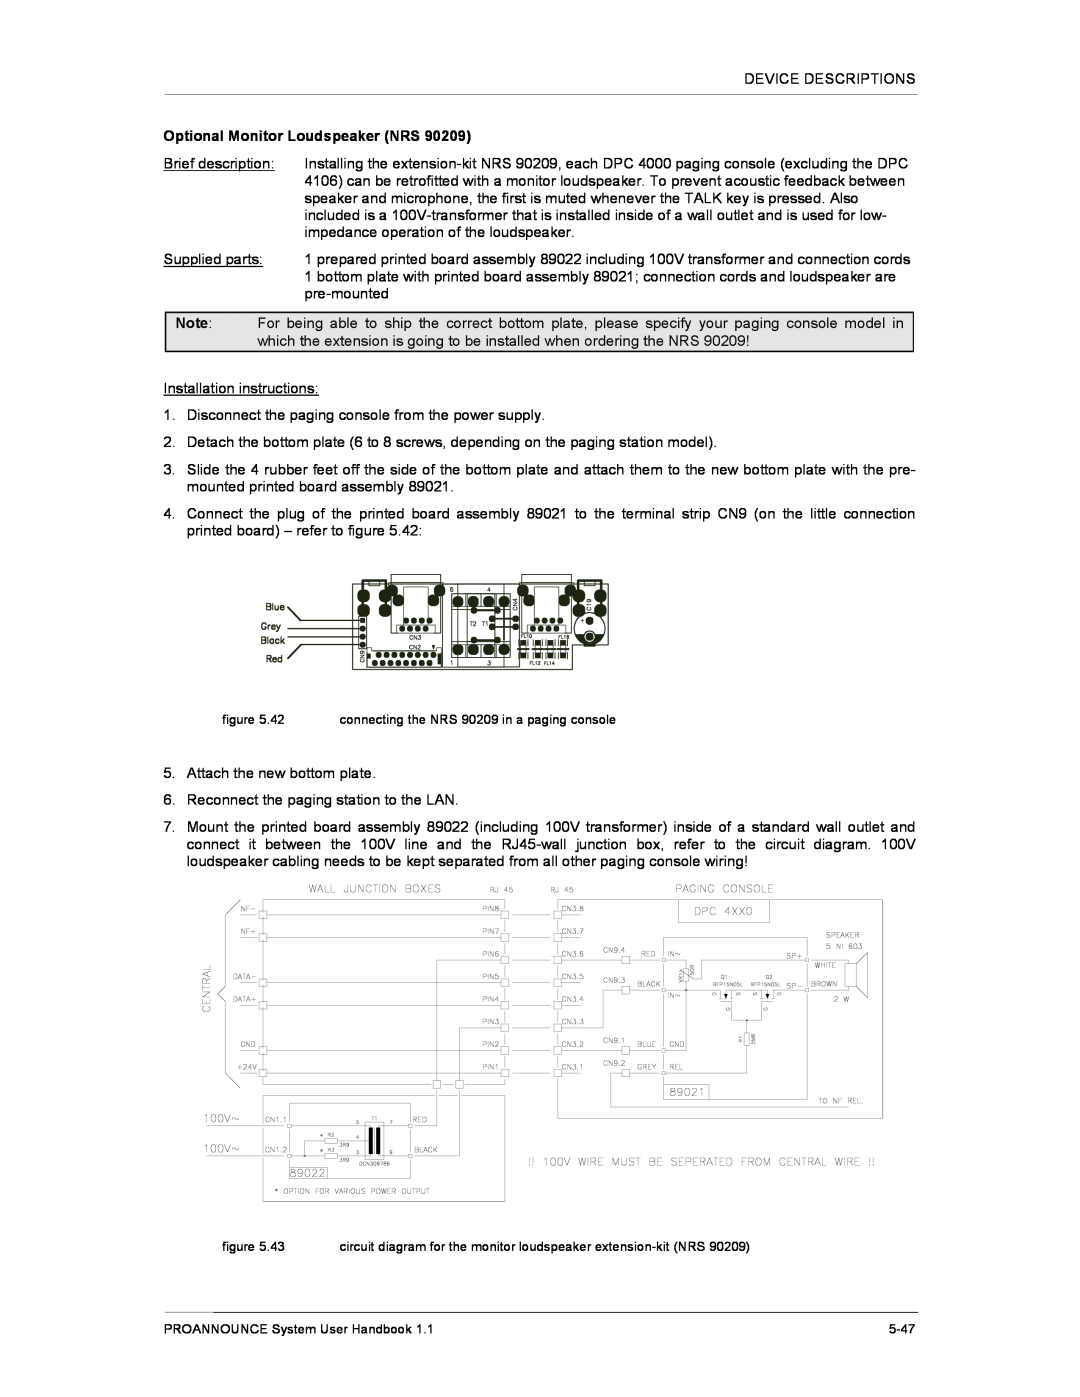 Dynacord DPM 4000 manual Optional Monitor Loudspeaker NRS 